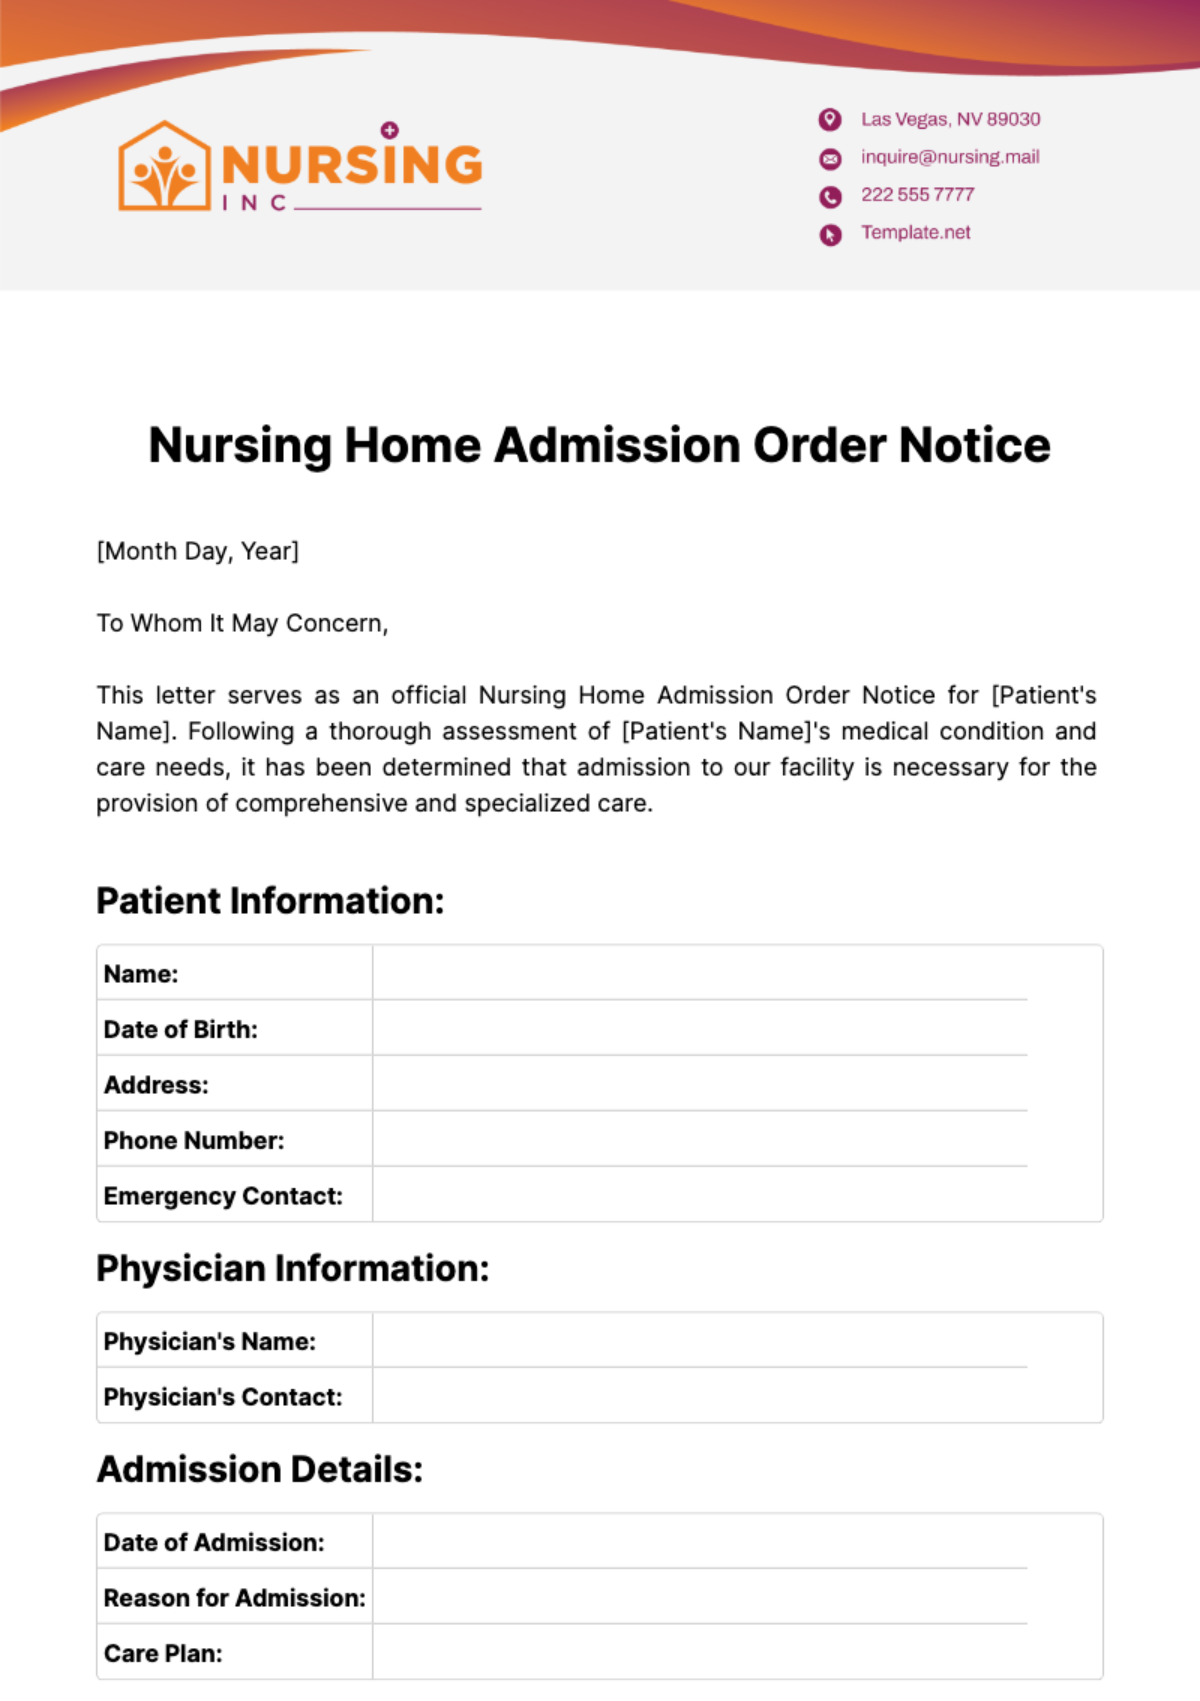 Nursing Home Admission Order Notice Template